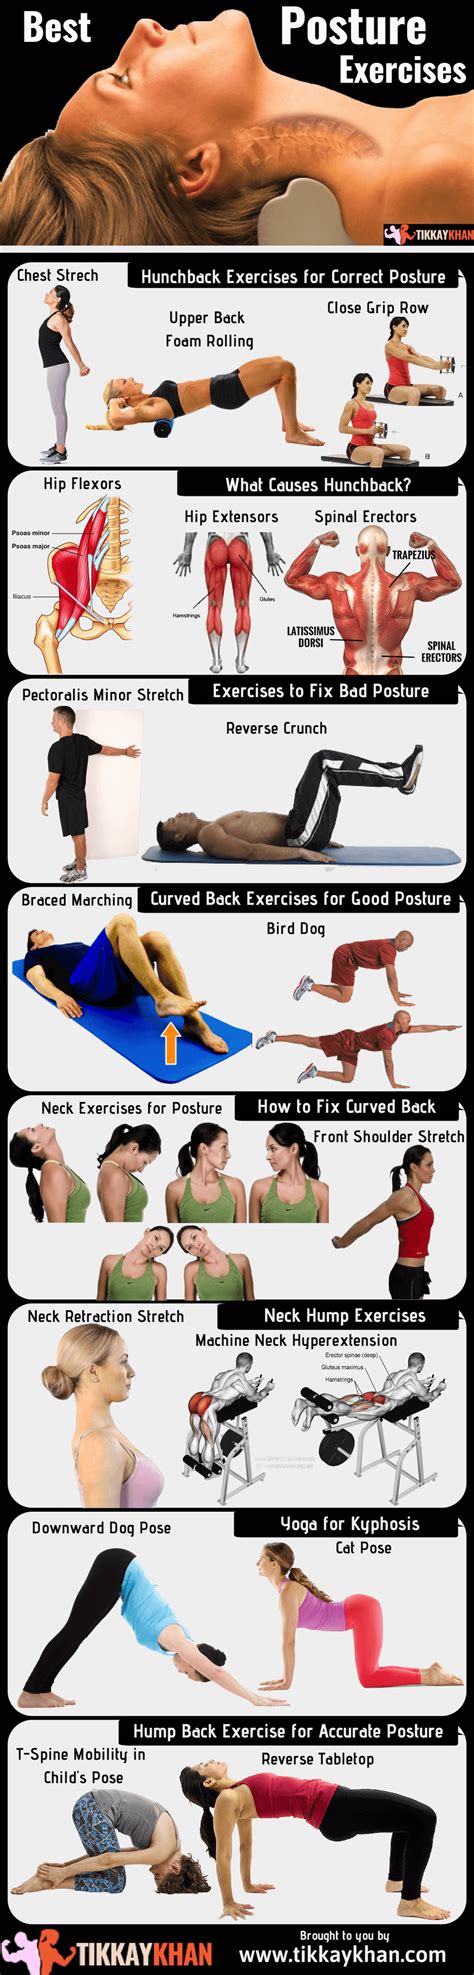 Best Posture Exercises - Health & Fitness